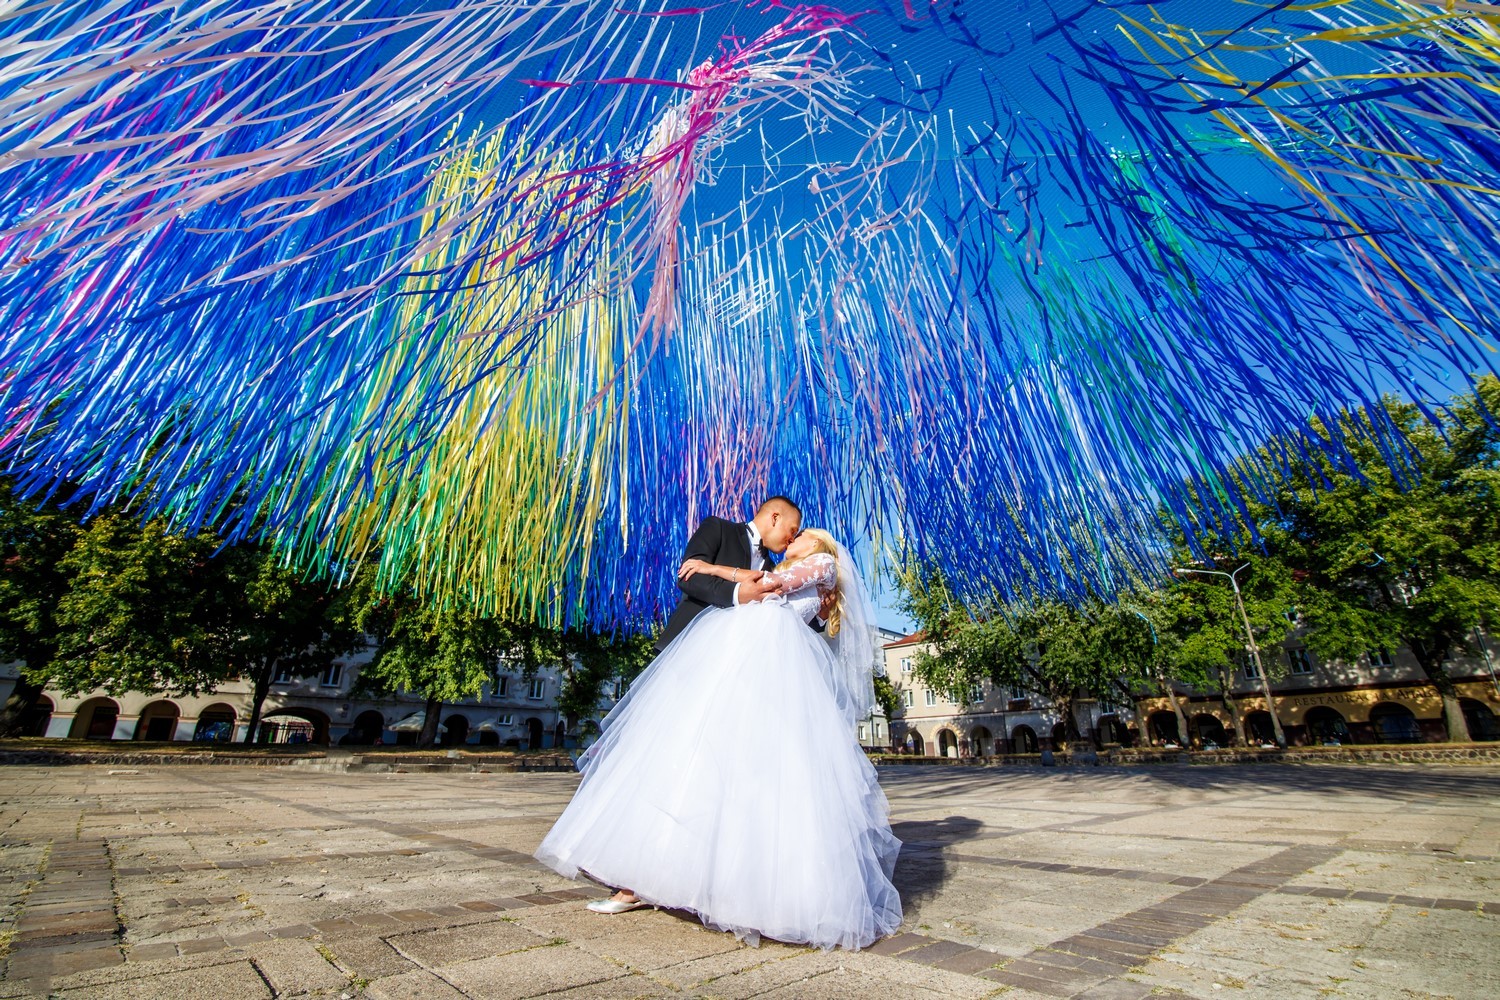 zdjęcia lodz fotograf michalskibe portfolio zdjecia slubne inspiracje wesele plener slubny sesja slubna